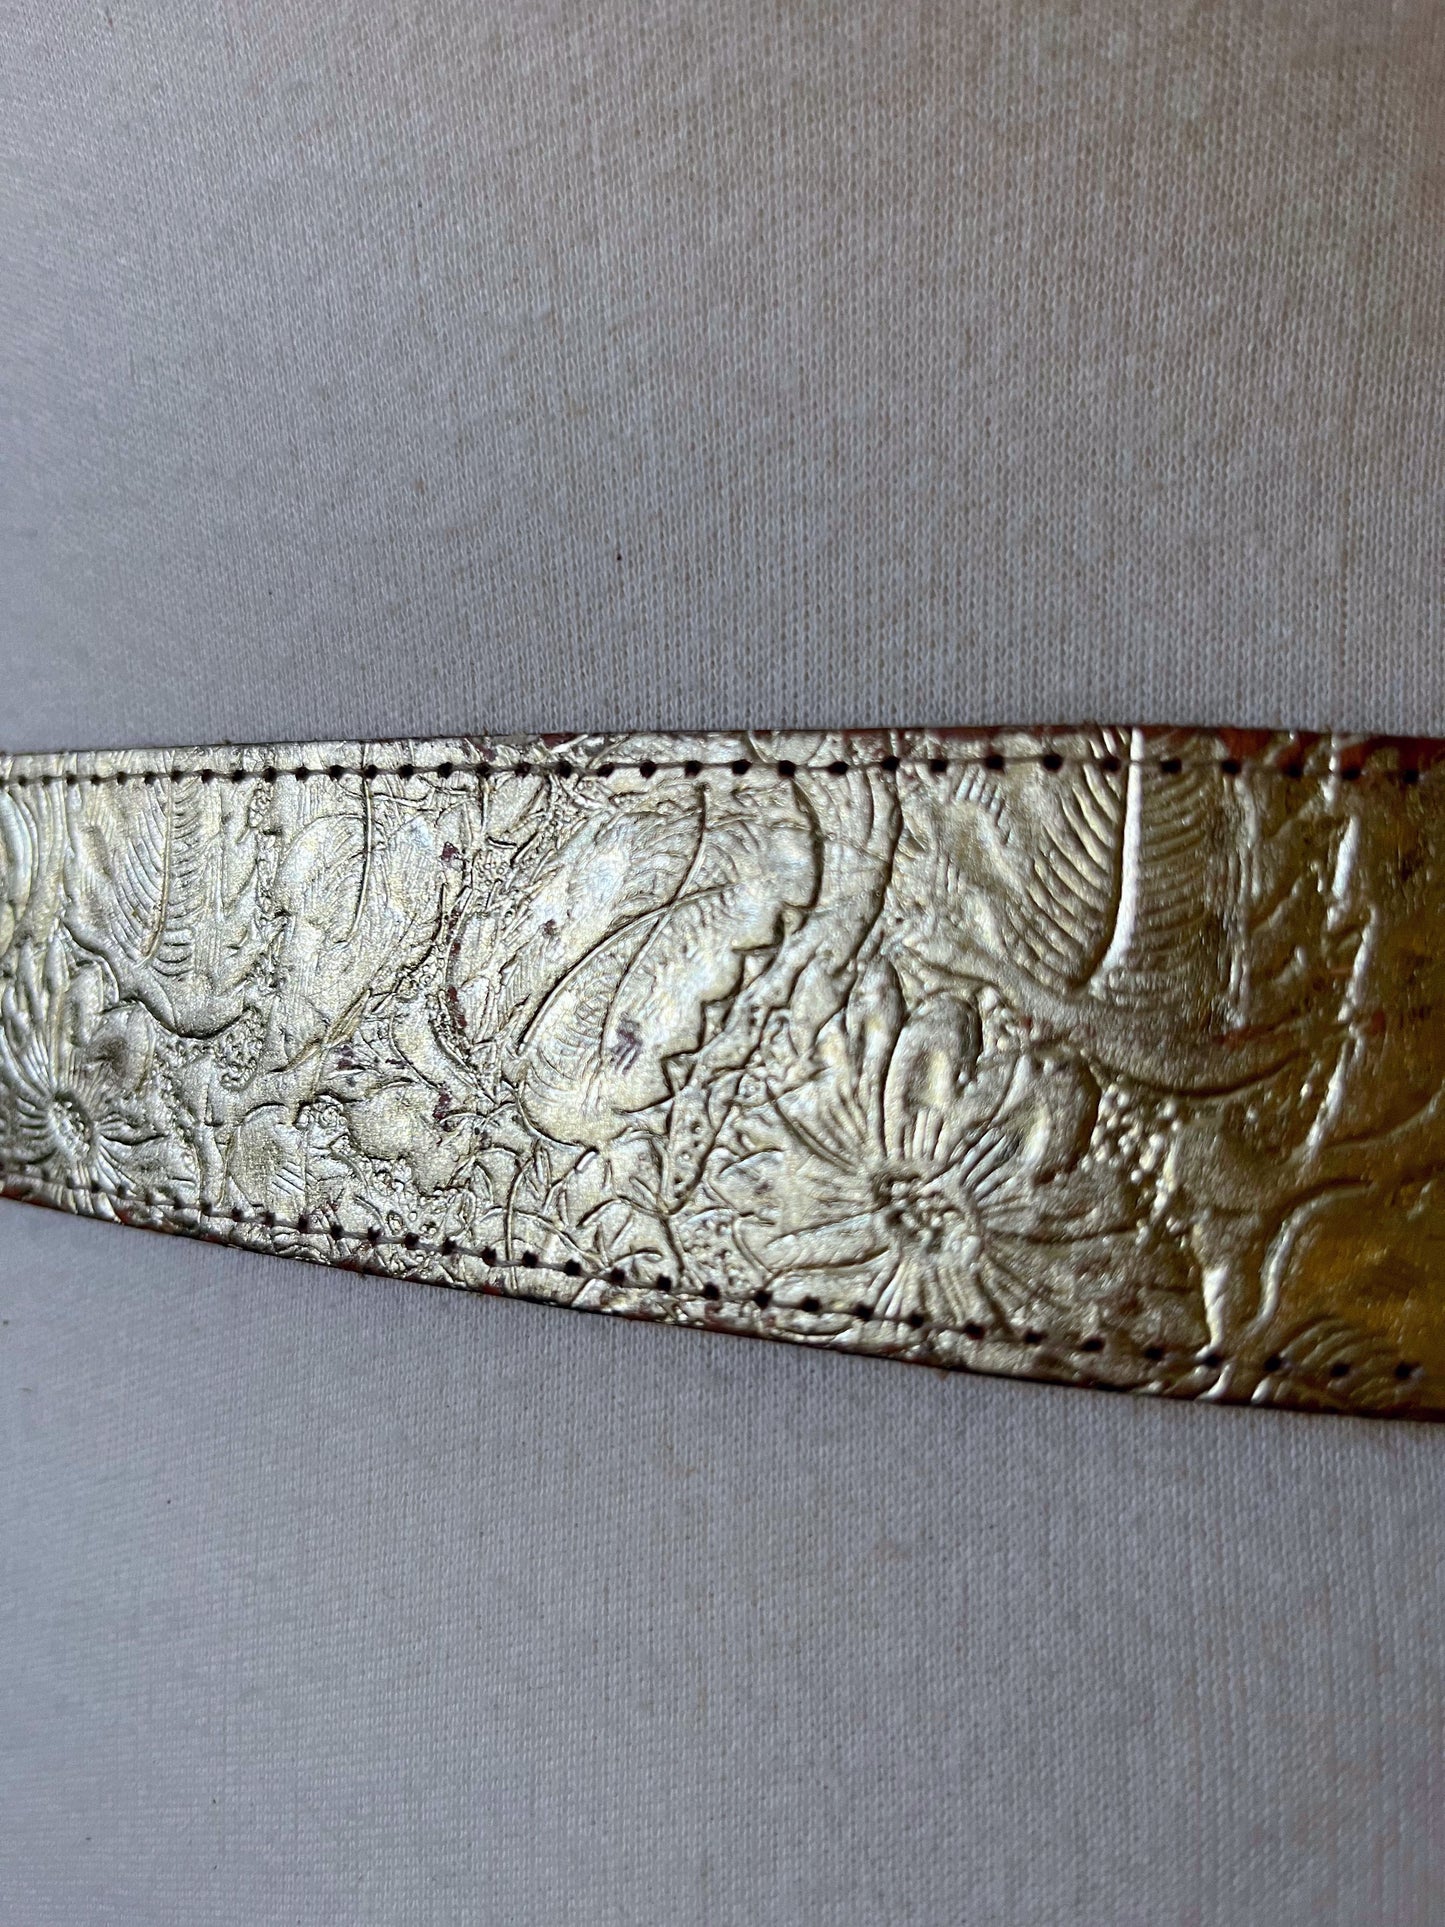 Gold Metallic Leather Belt